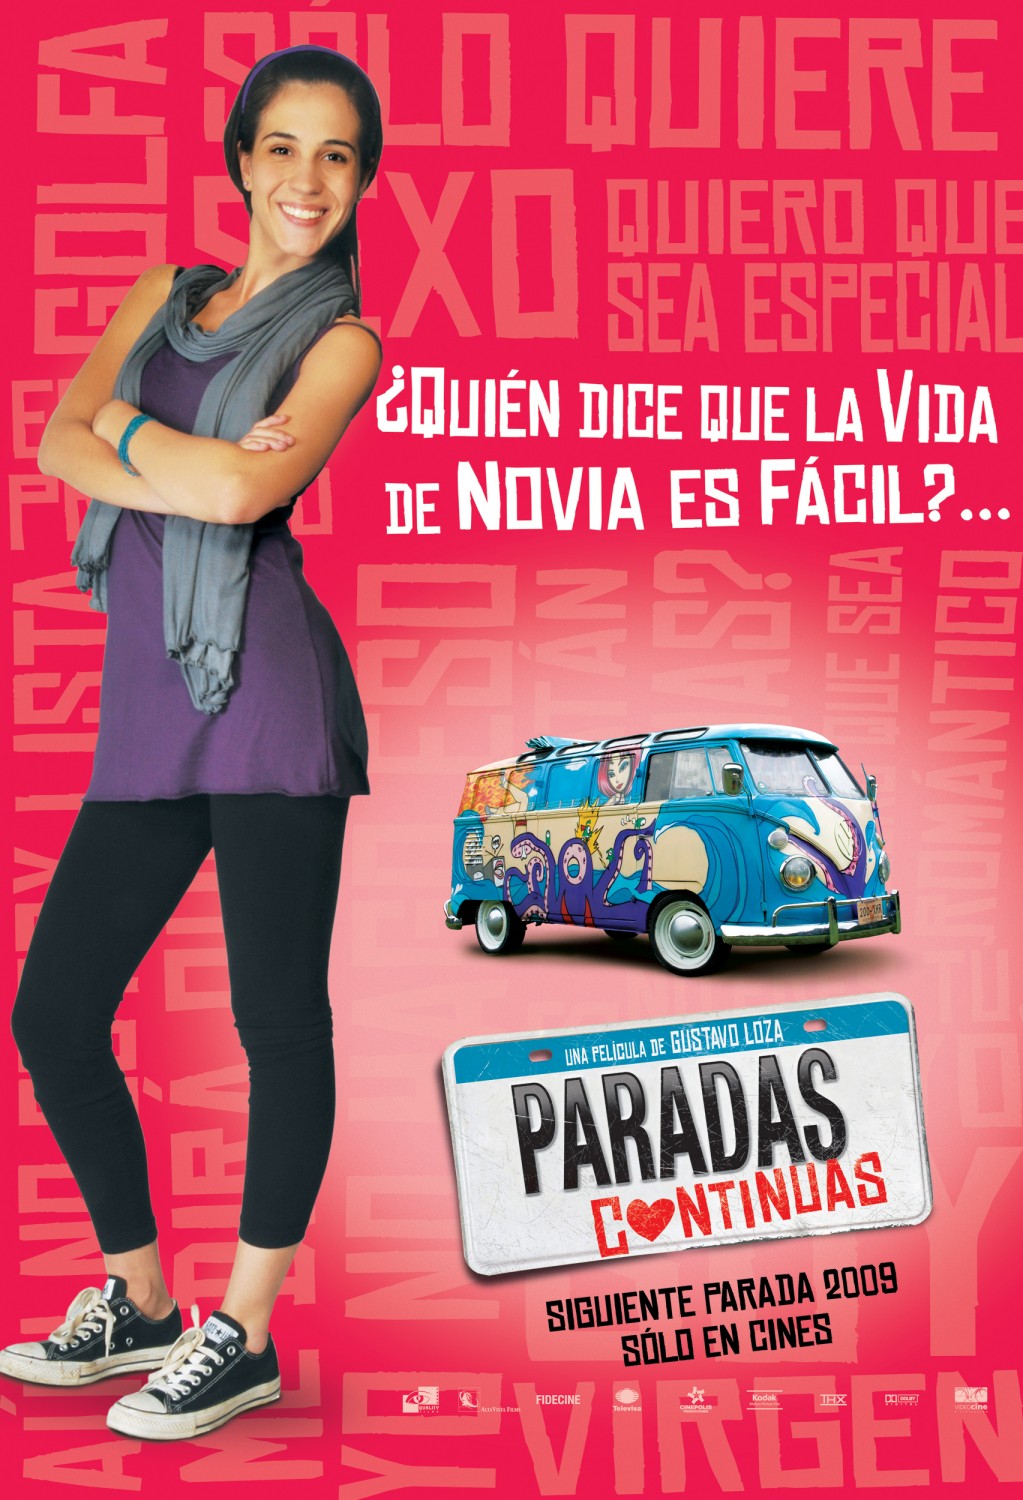 Extra Large Movie Poster Image for Paradas continuas (#4 of 5)